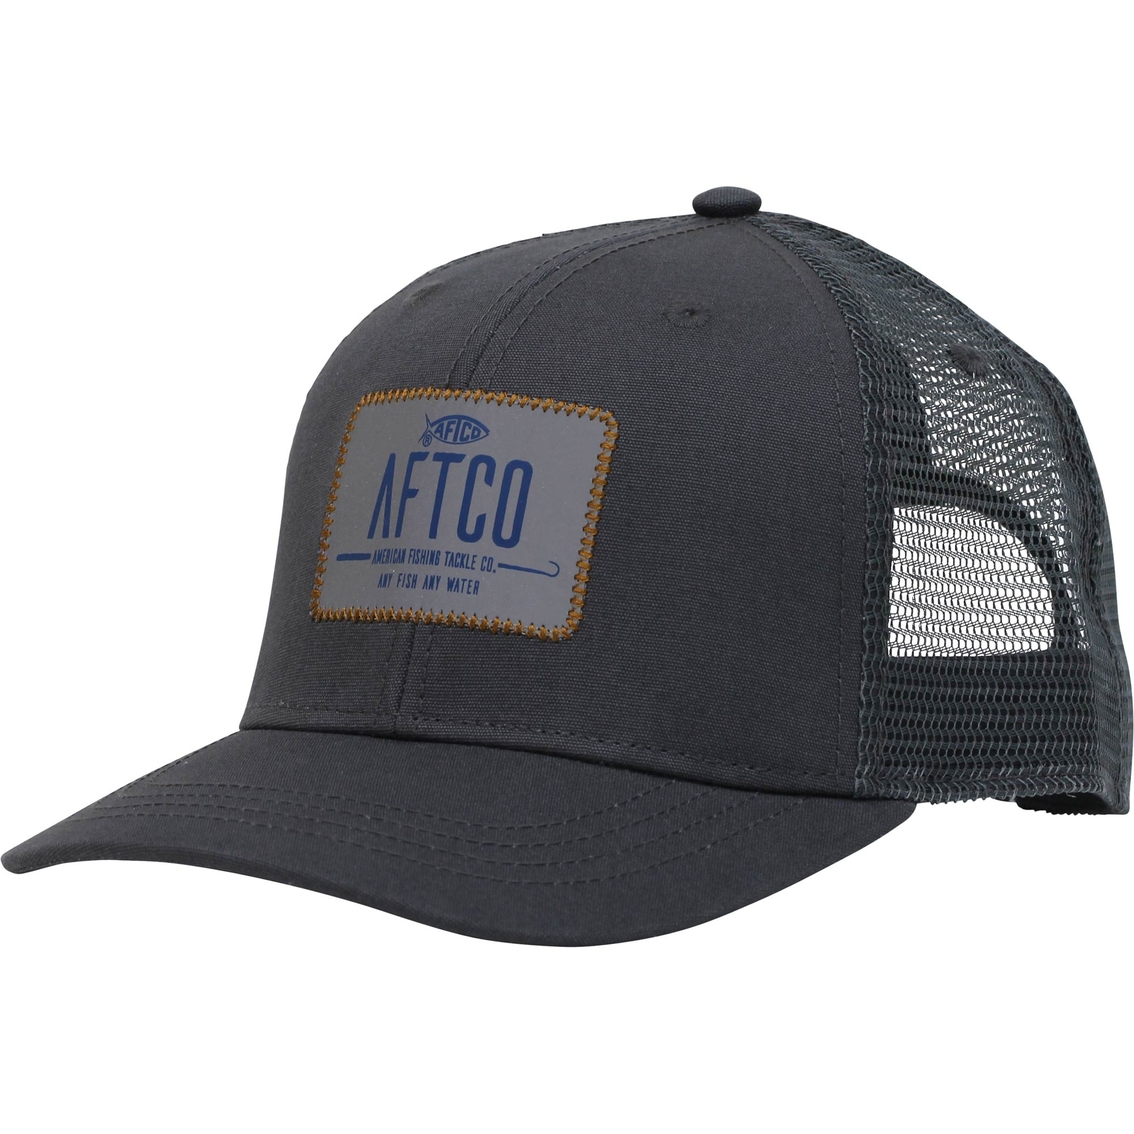 Aftco Twisted Trucker Cap, Hats & Visors